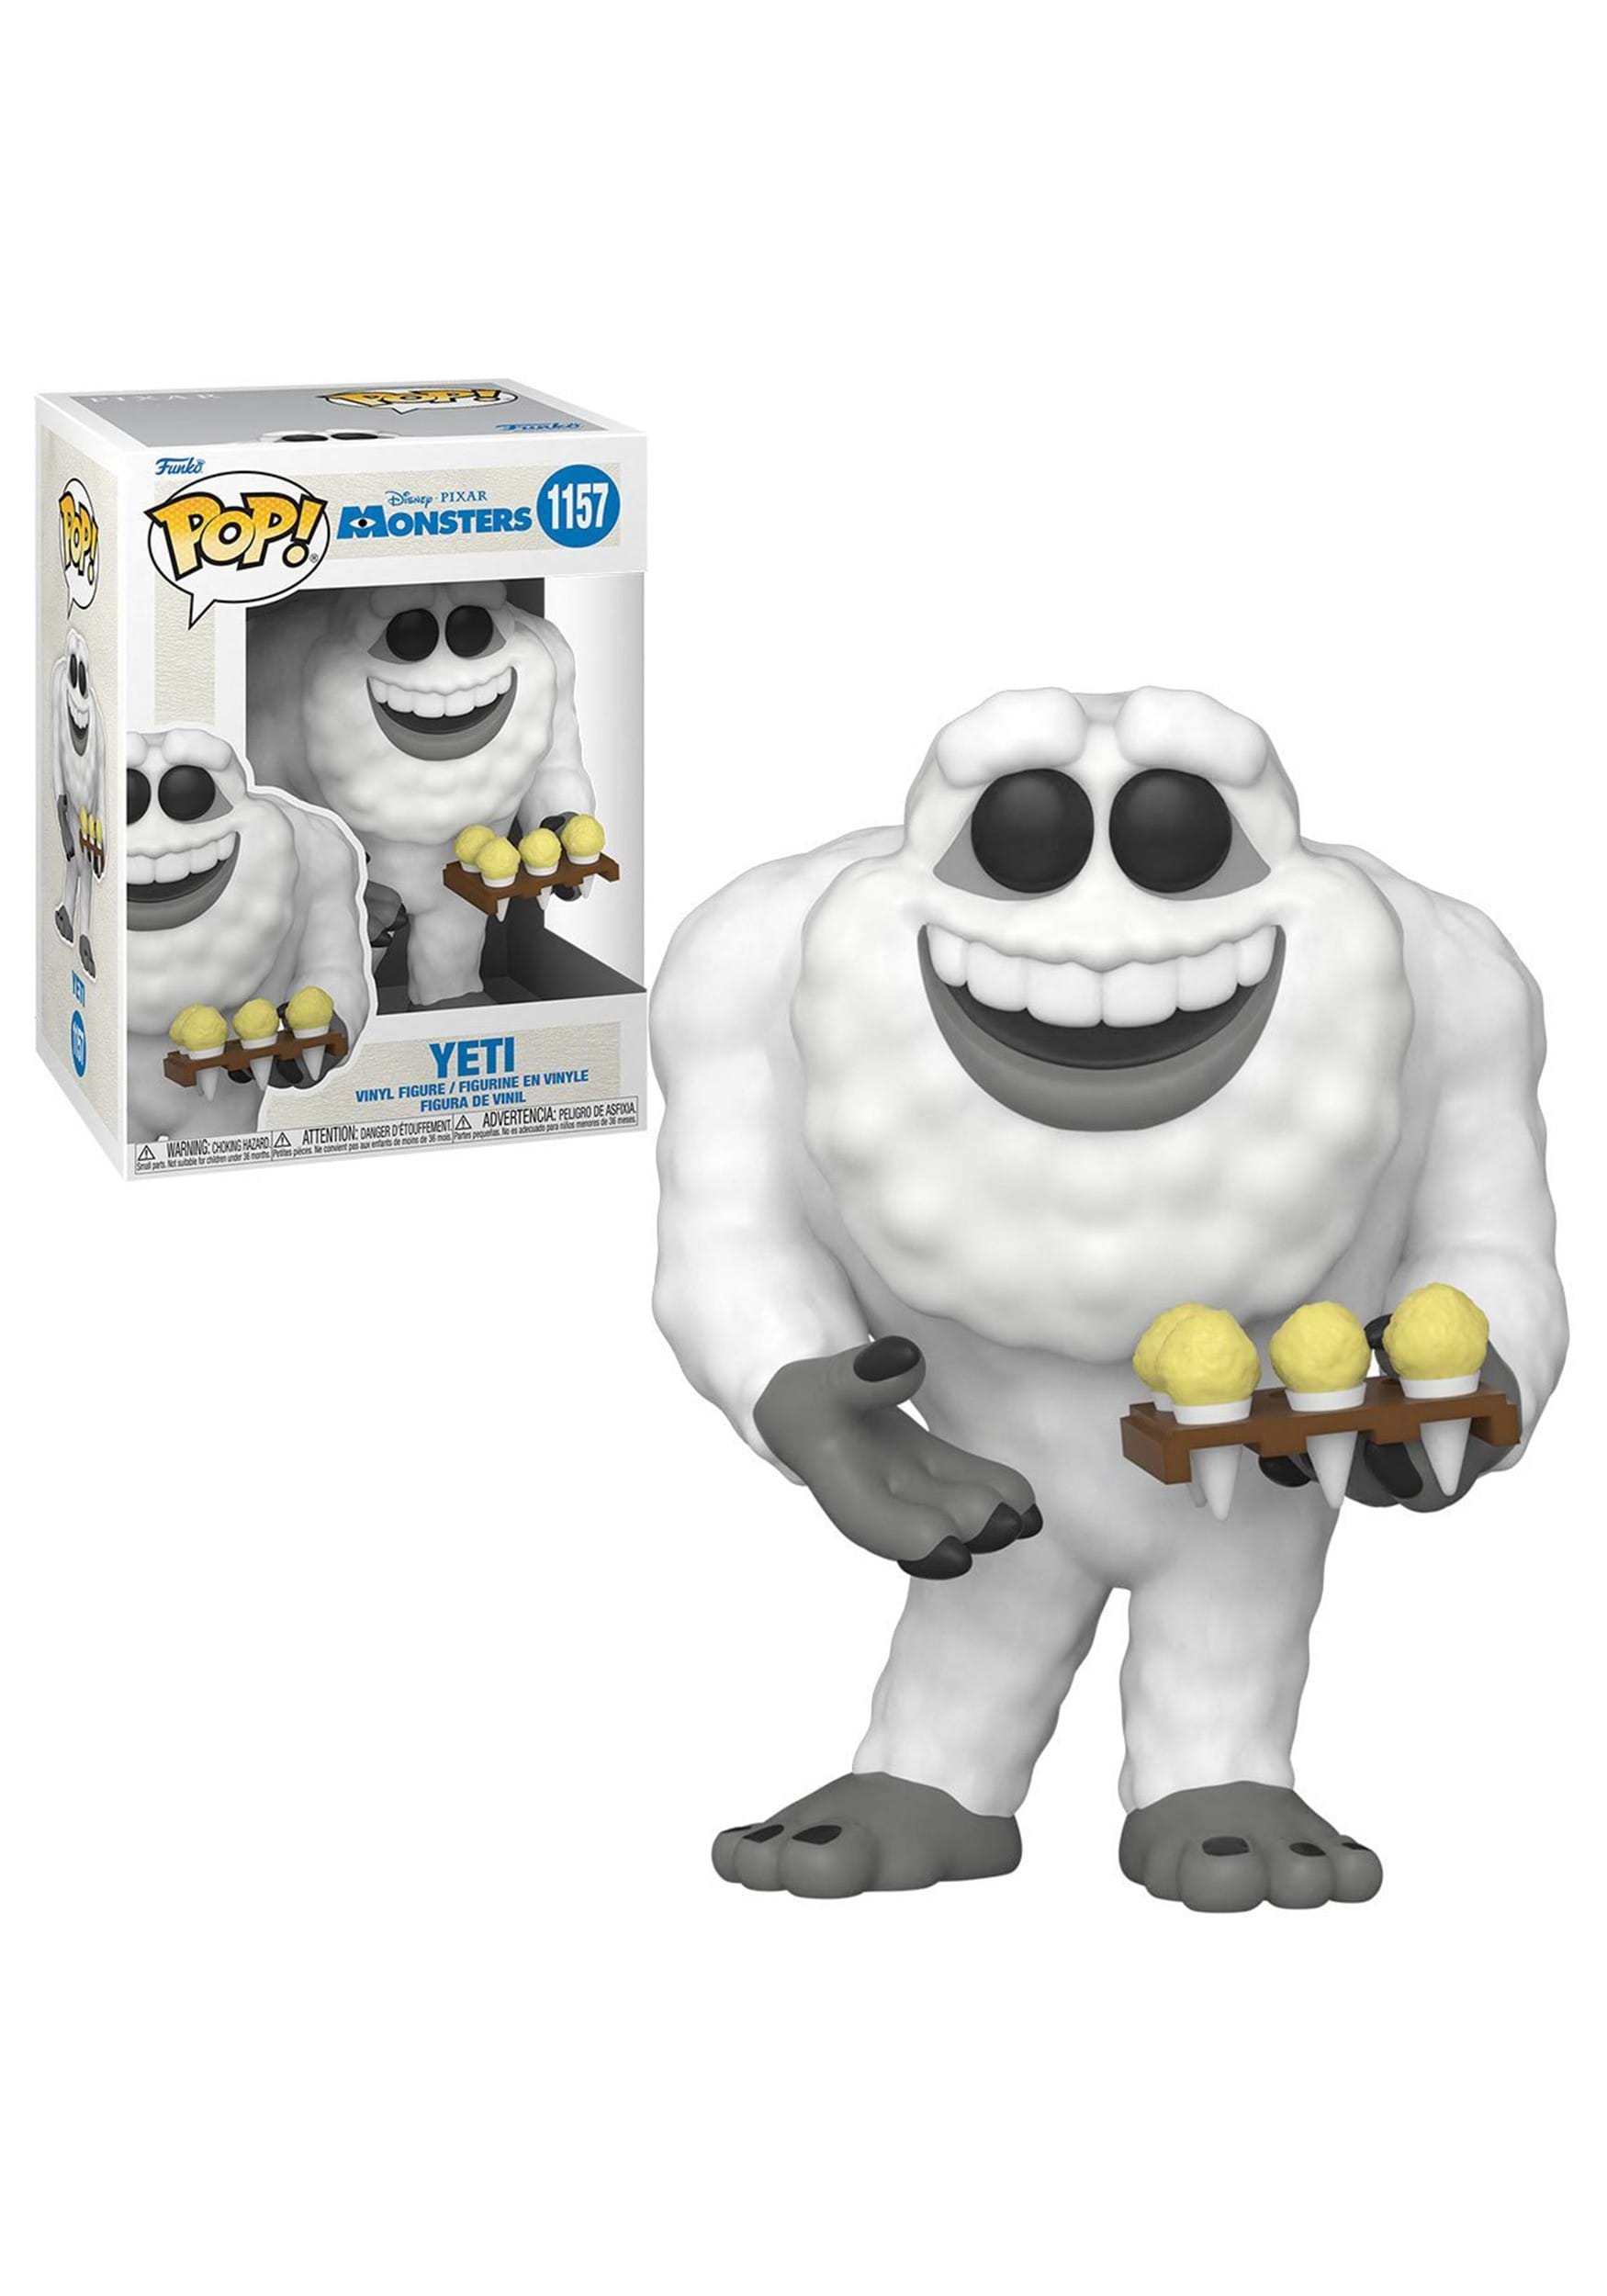  Mattel Disney Pixar Monsters, Inc. Abominable Snowman